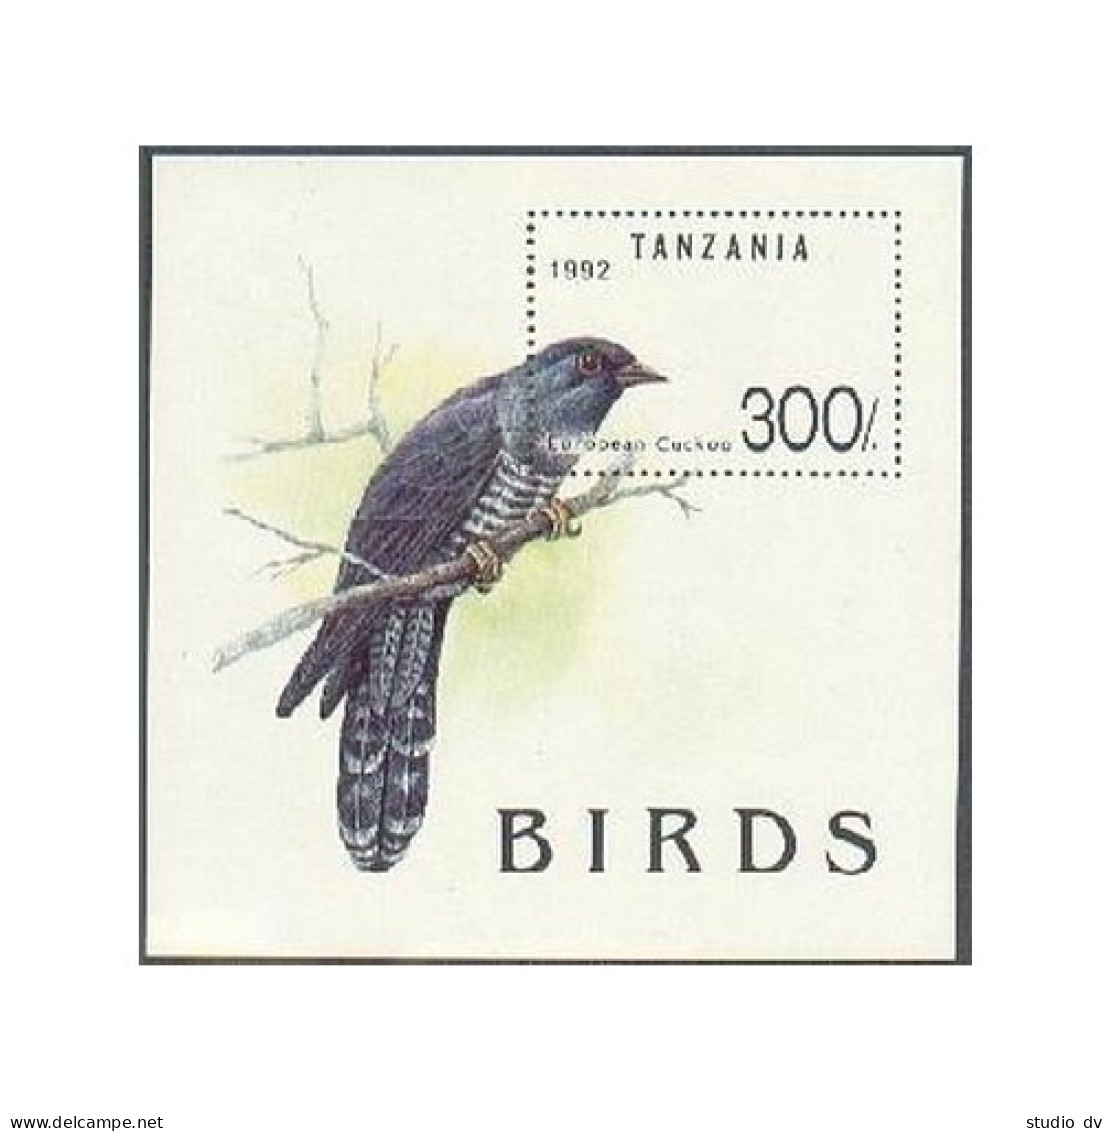 Tanzania 978-985,MNH.Mi 1315-1321,Bl.190. Birds: Starling, Canary, Bush, Cockoo, - Tanzanie (1964-...)